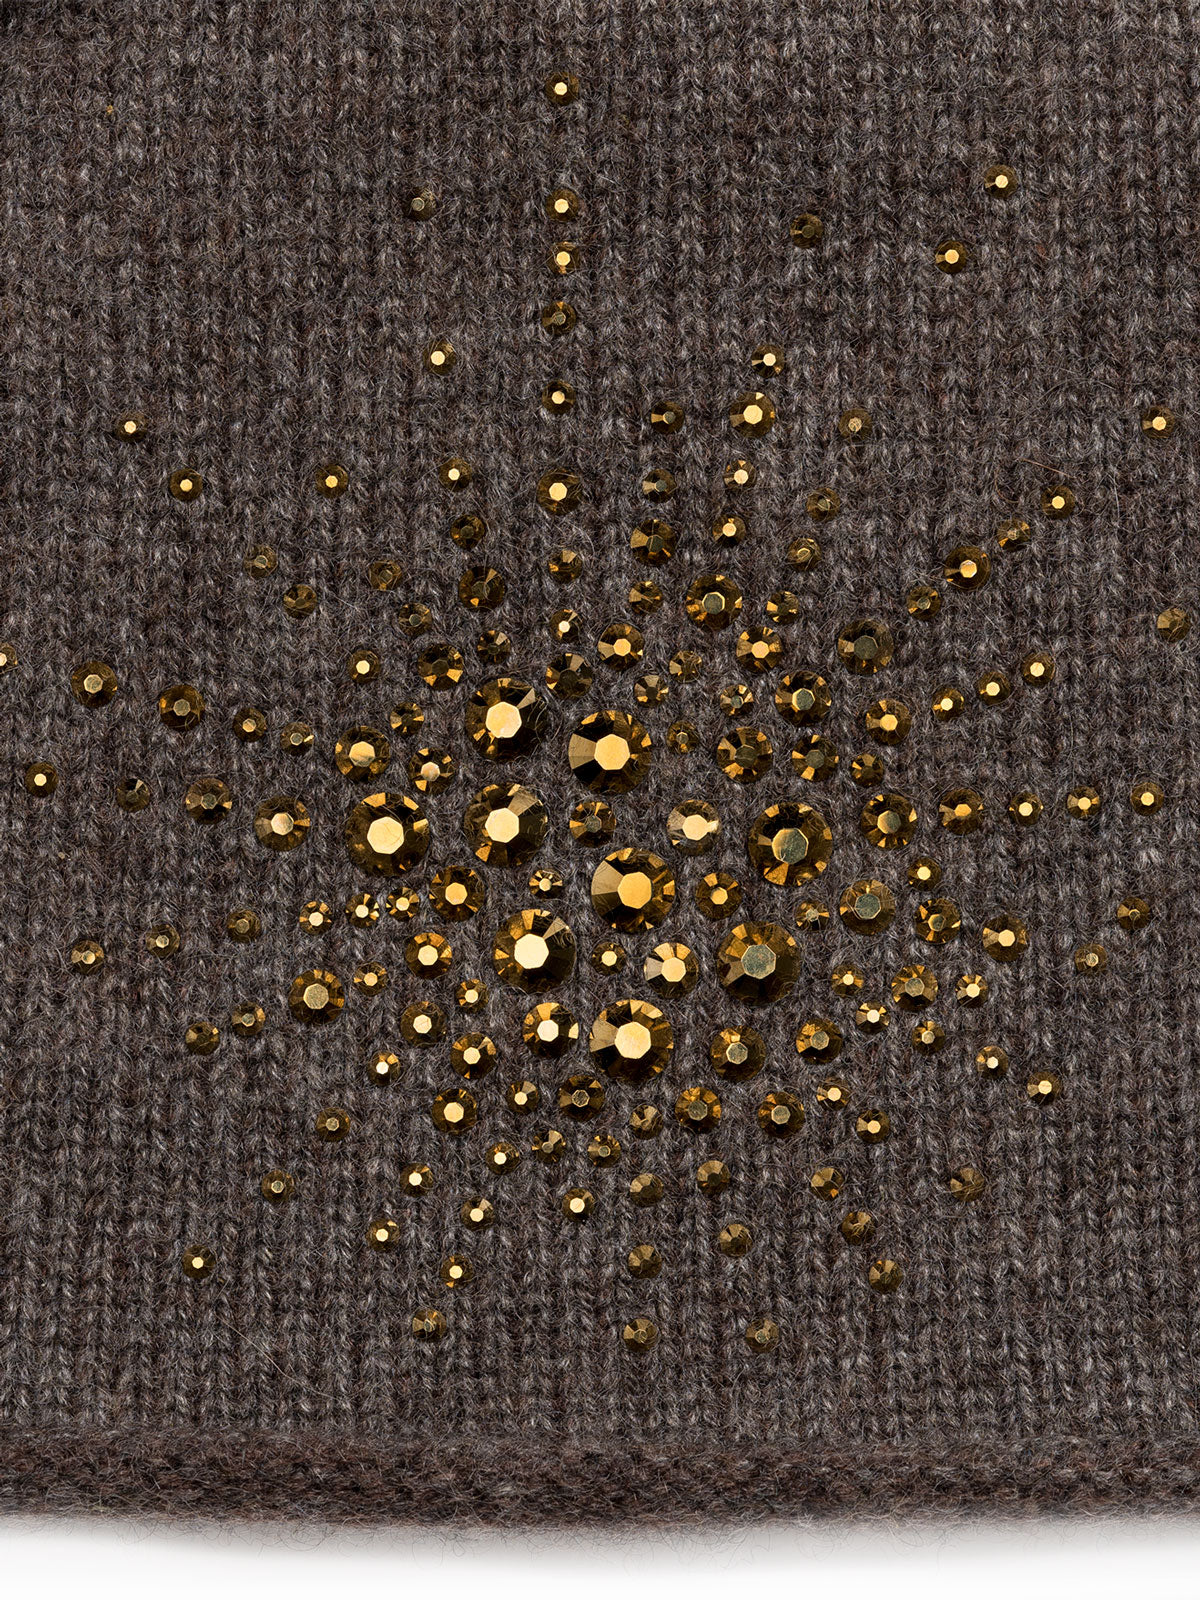 Metallic Brown Sea Urchin Cloche fabric swatch.